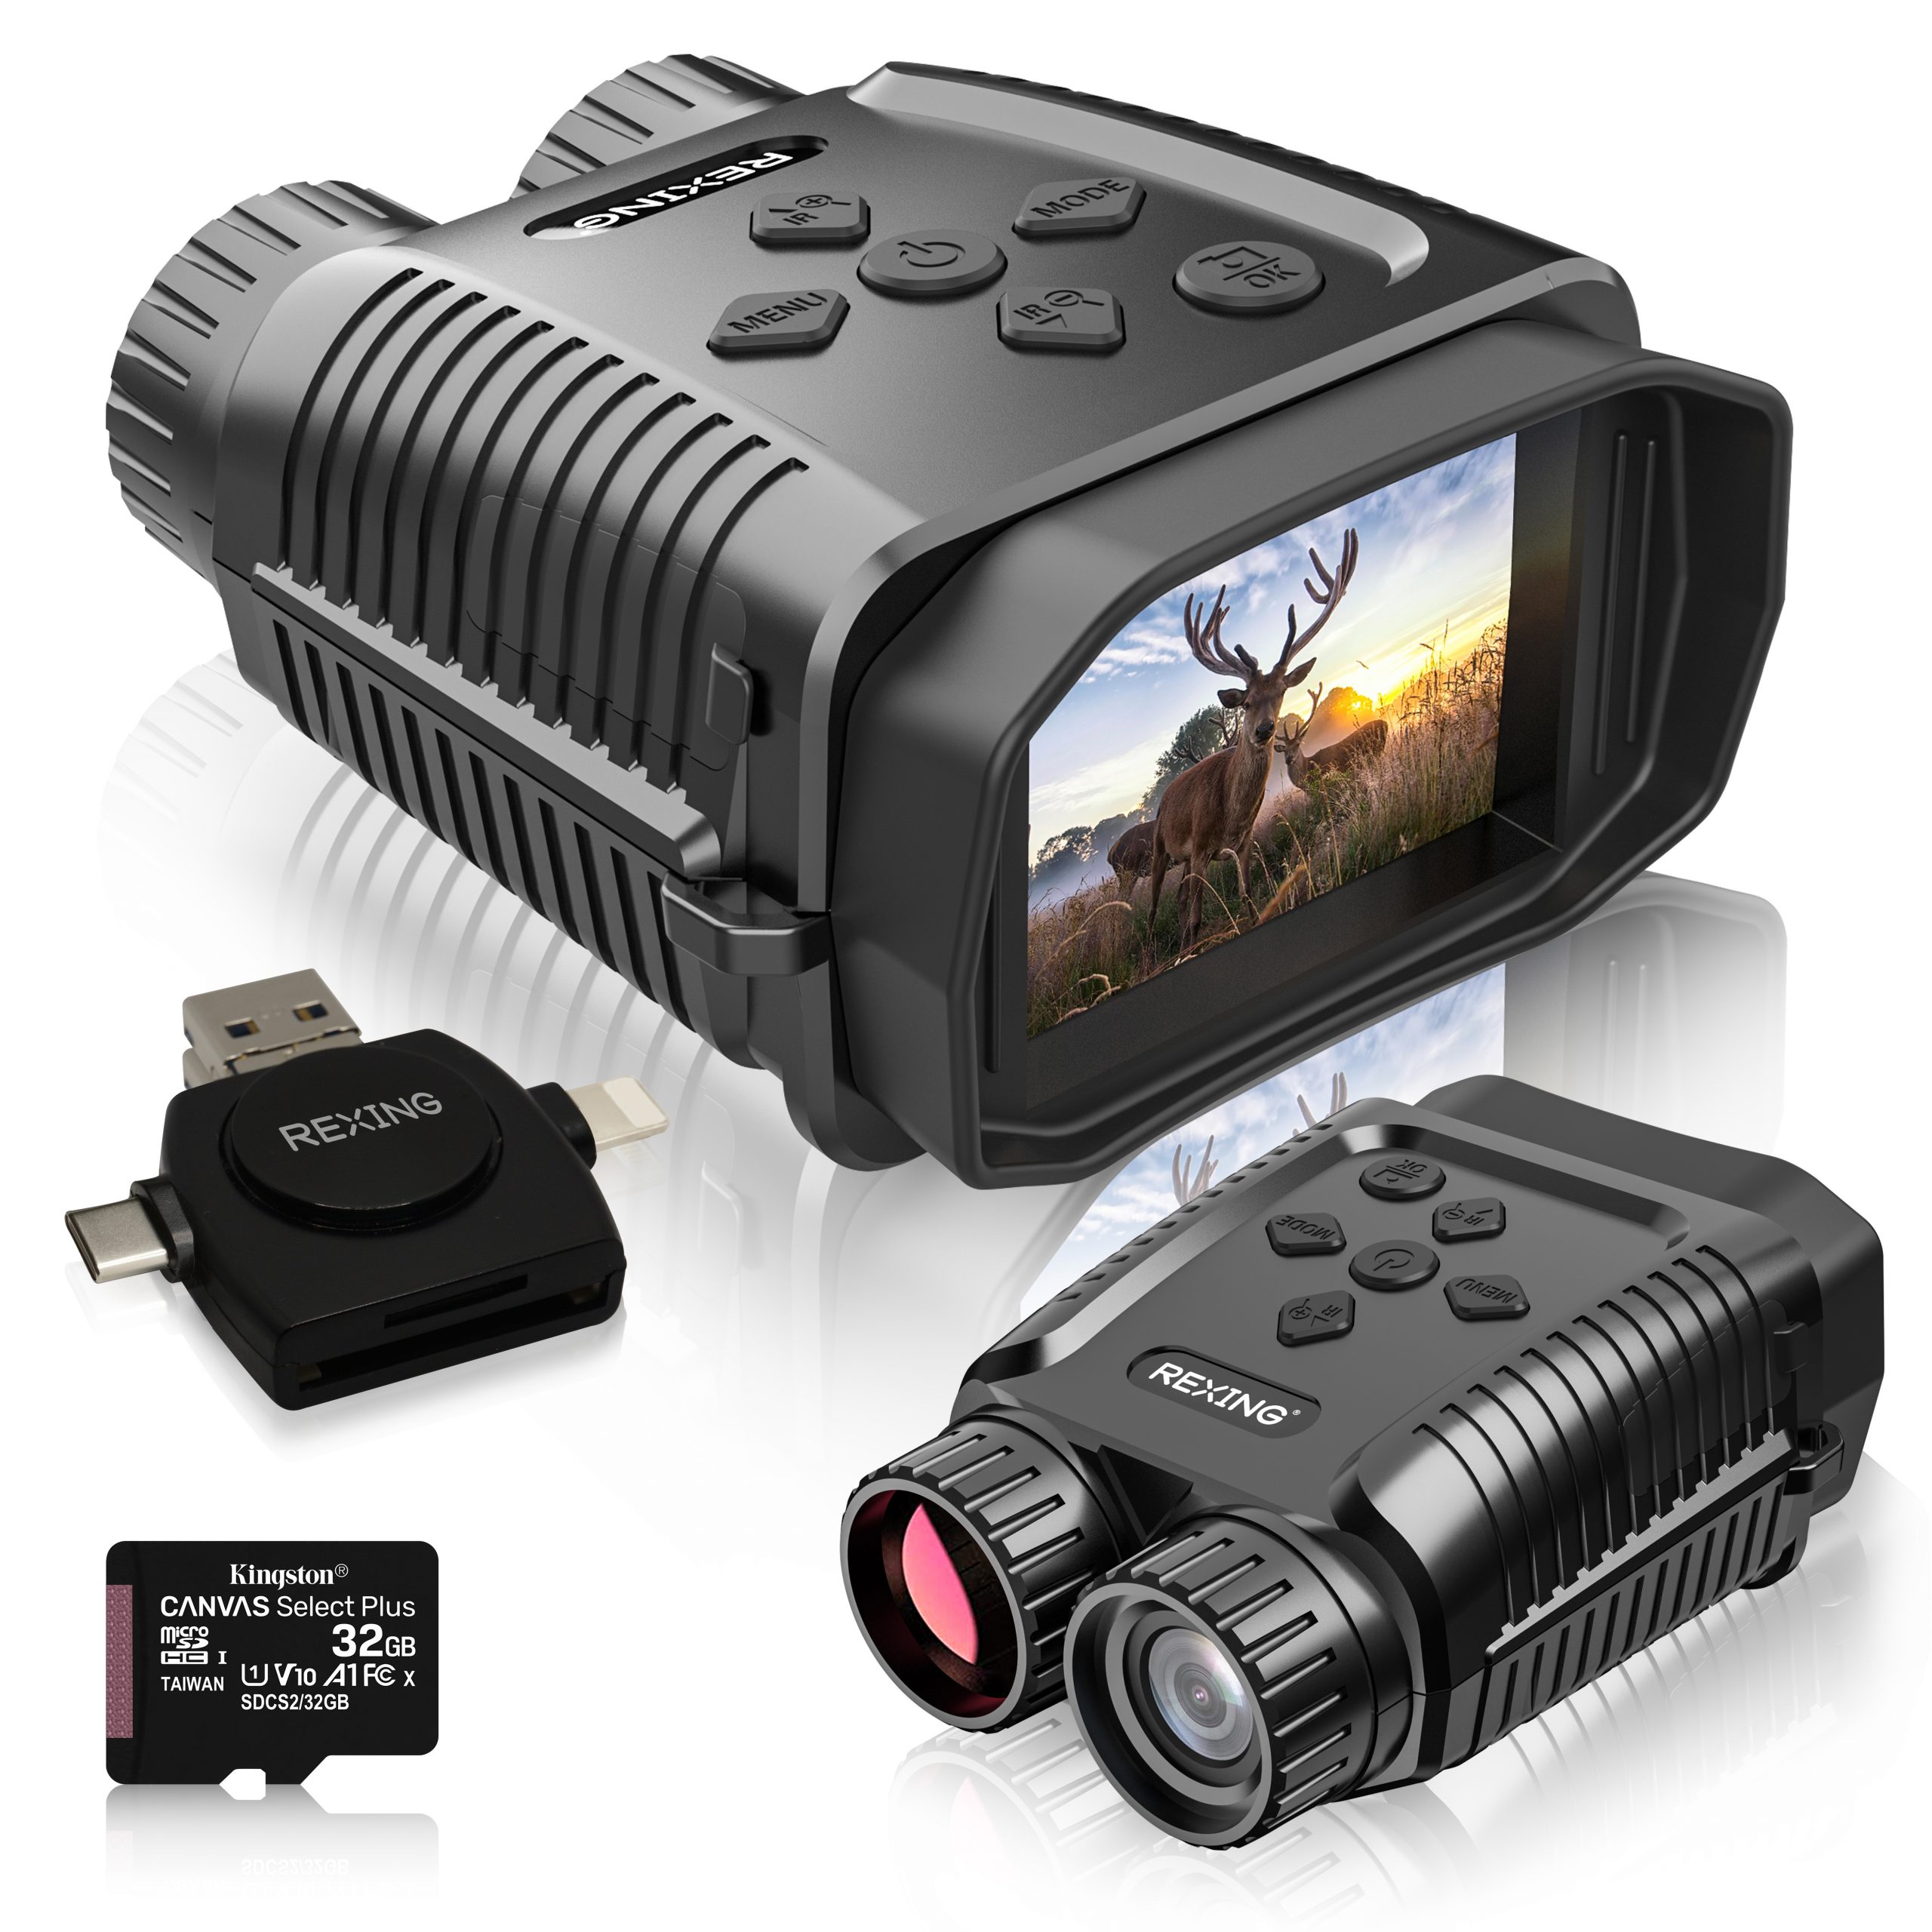 REXING B1 Mini - 4K Night Vision Mini Digital Binoculars - Travel Infrared Binoculars Save Image And Video w/ Viewing Screen, High-Tech Hunting Gear